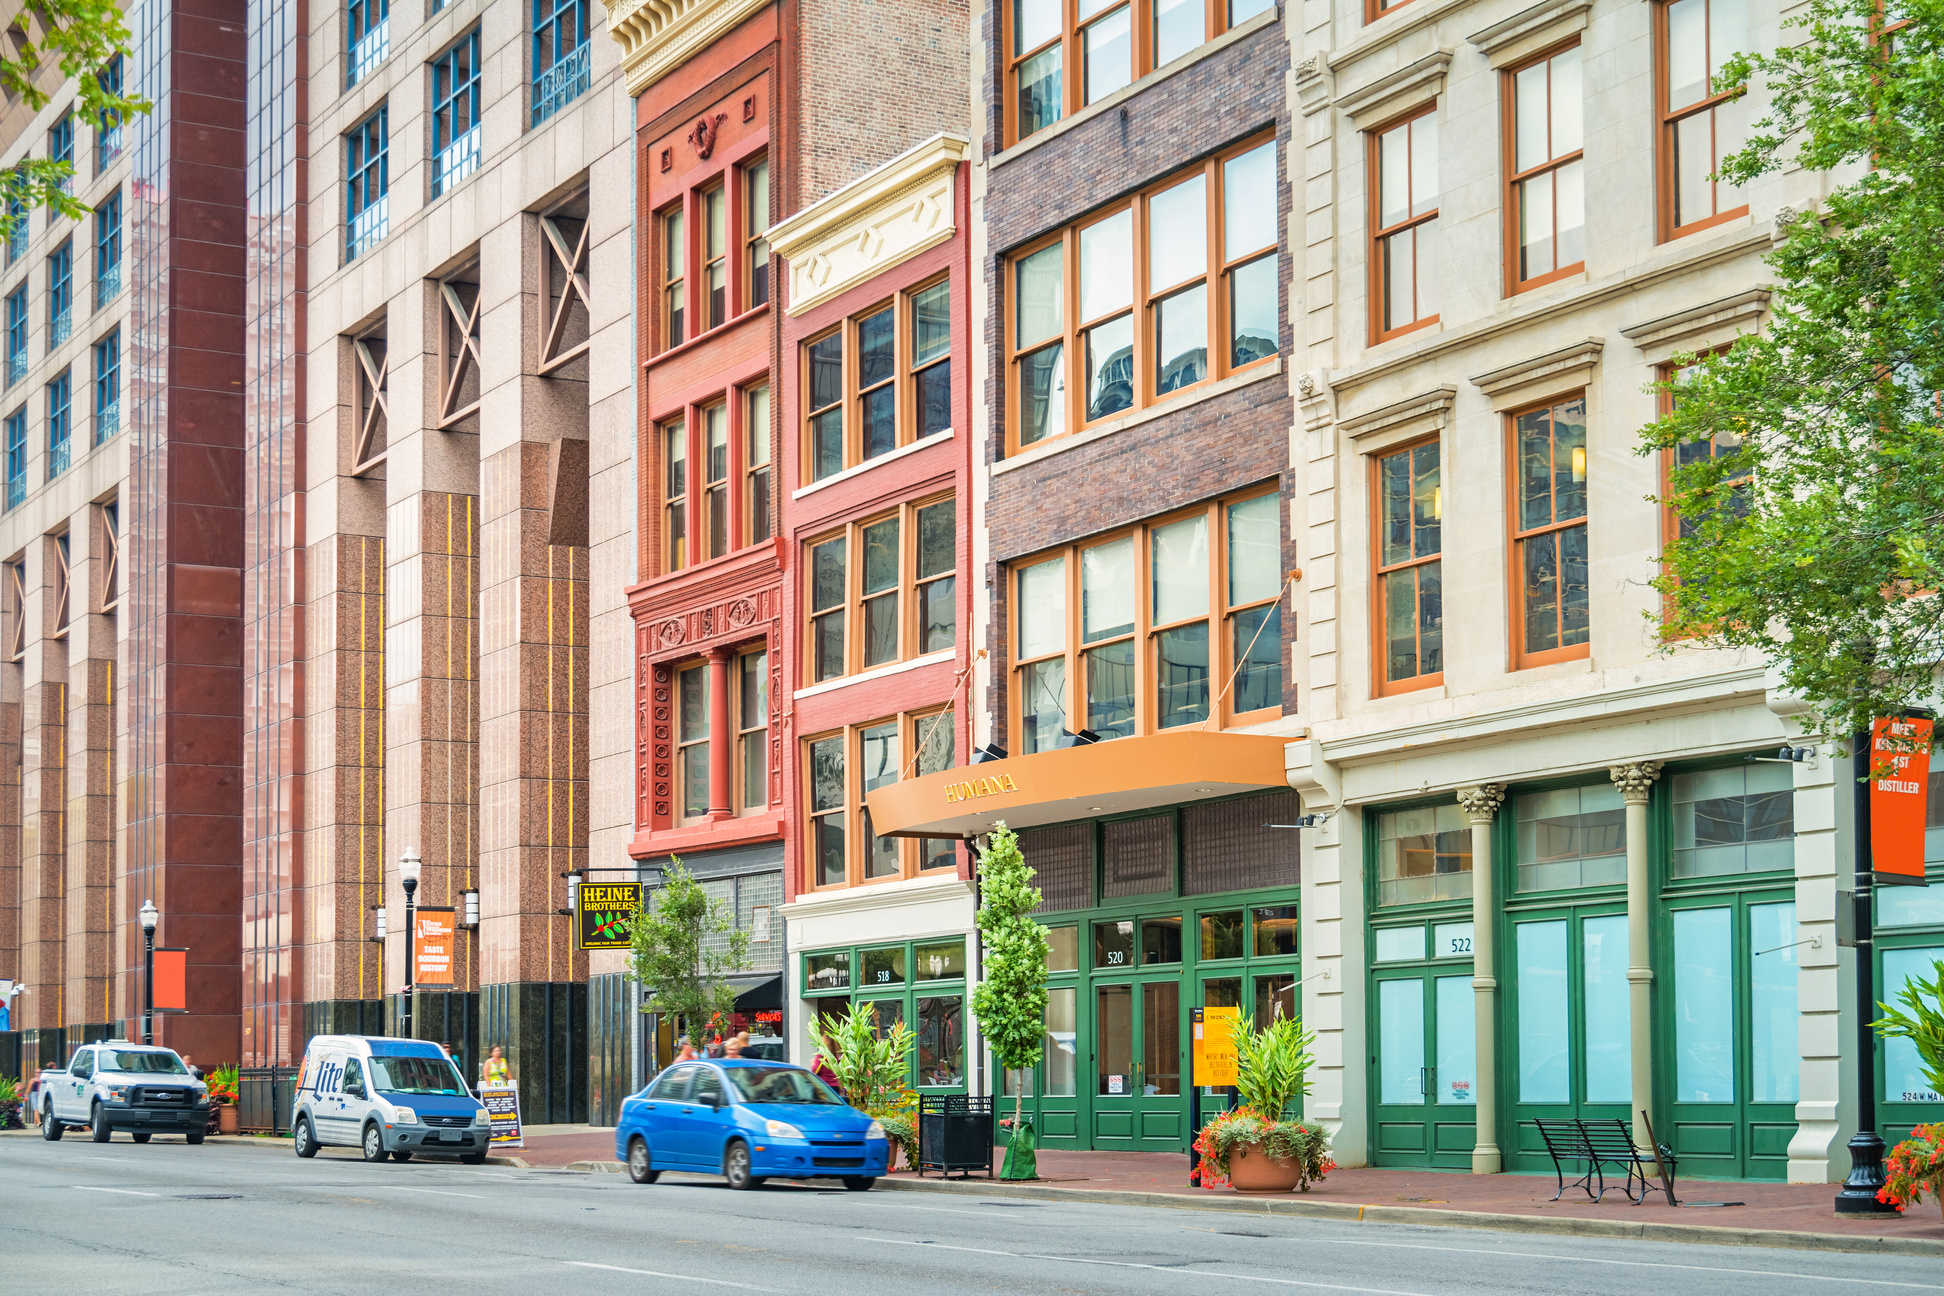 Ornate facades in downtown Louisville Kentucky USA